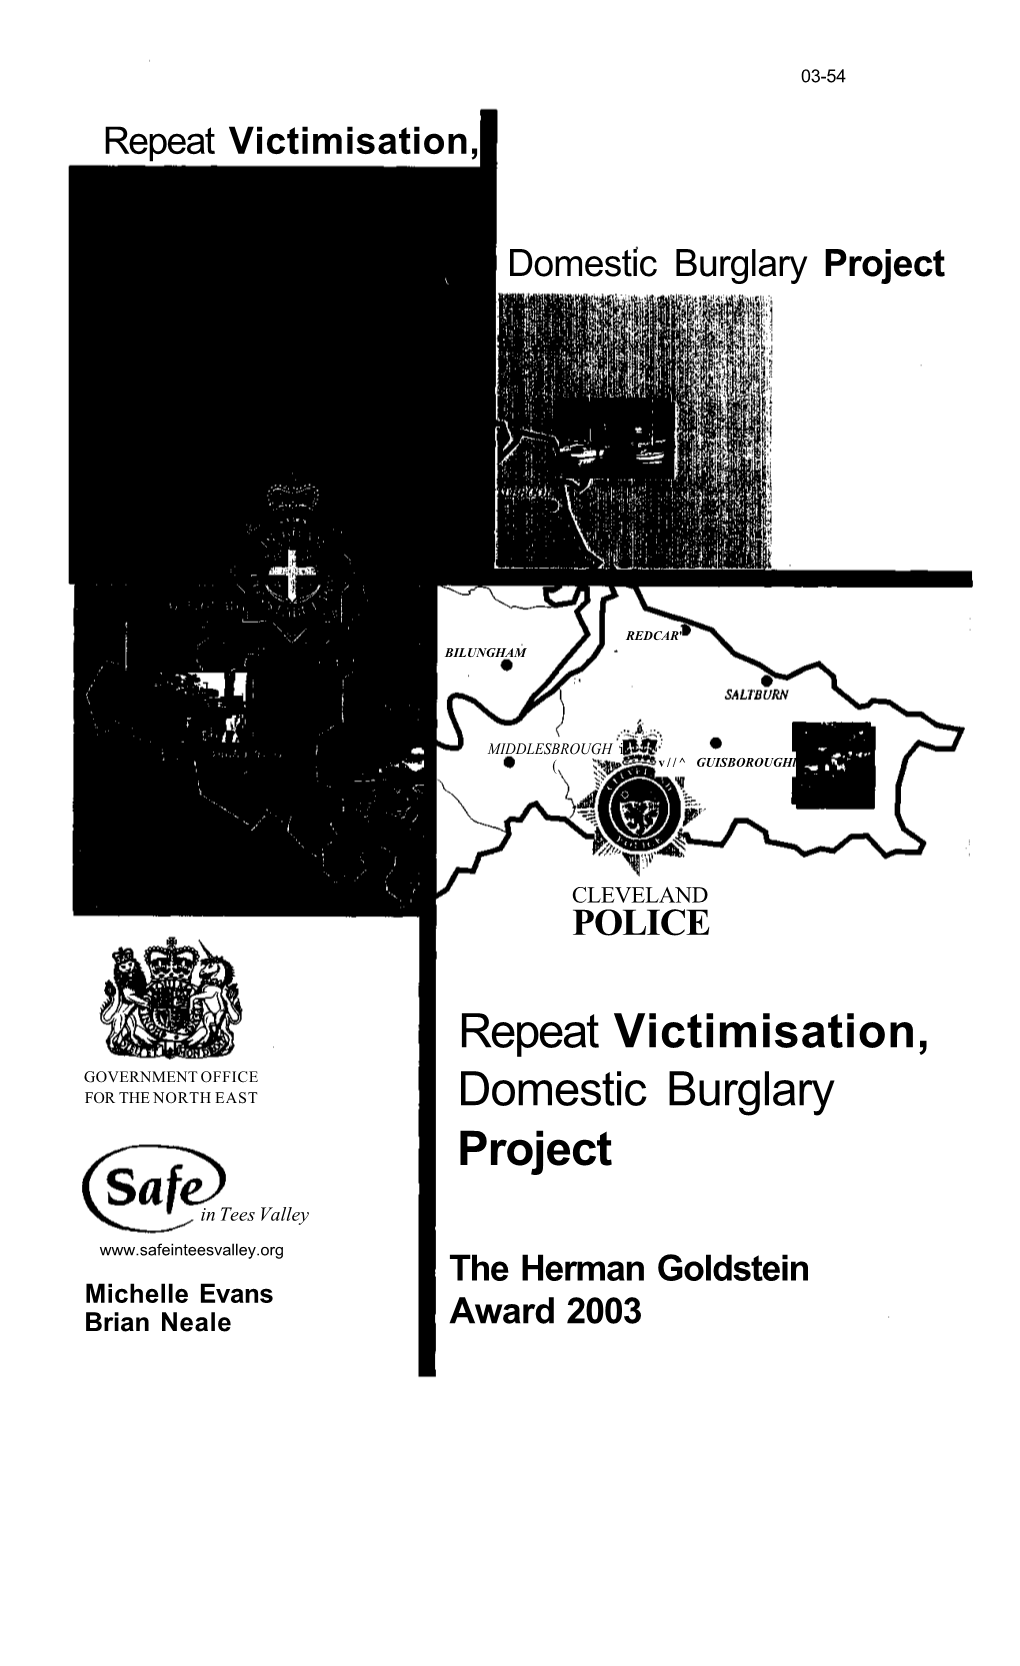 Repeat Victimisation, Domestic Burglary Project (2003)